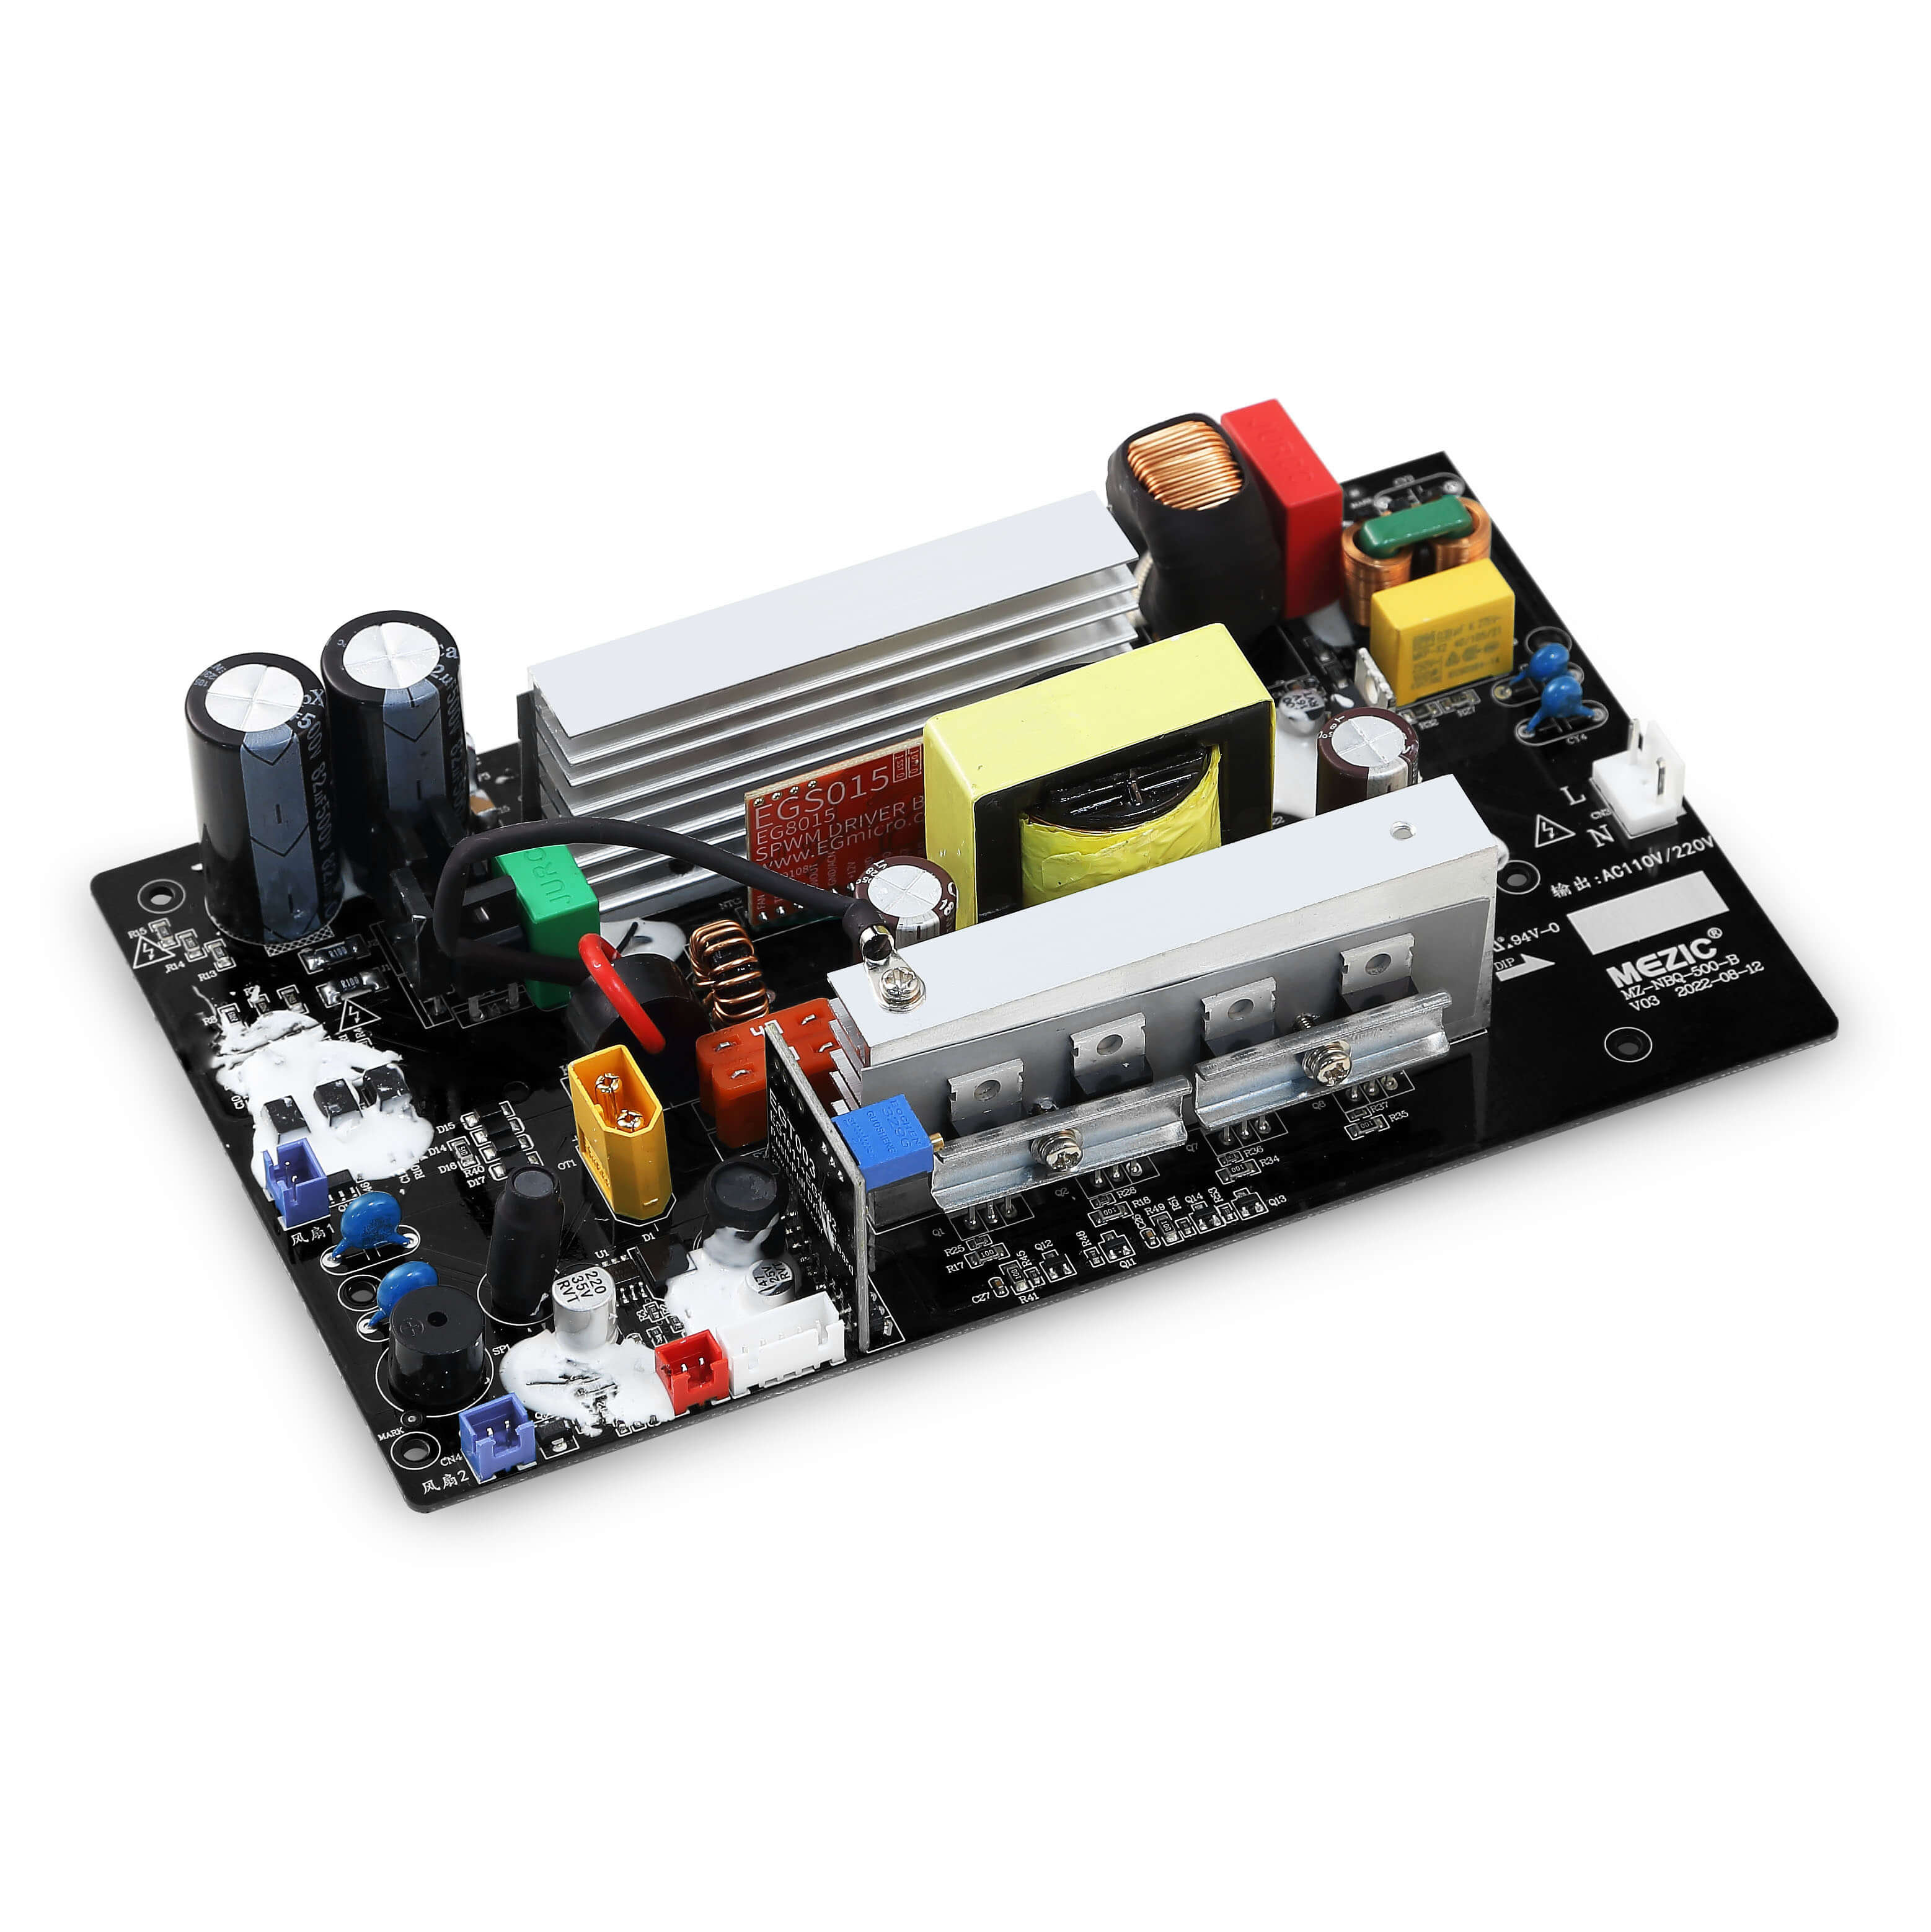 Energy storage inverter PCBA Printed circuit board assembly for energy storage inverters